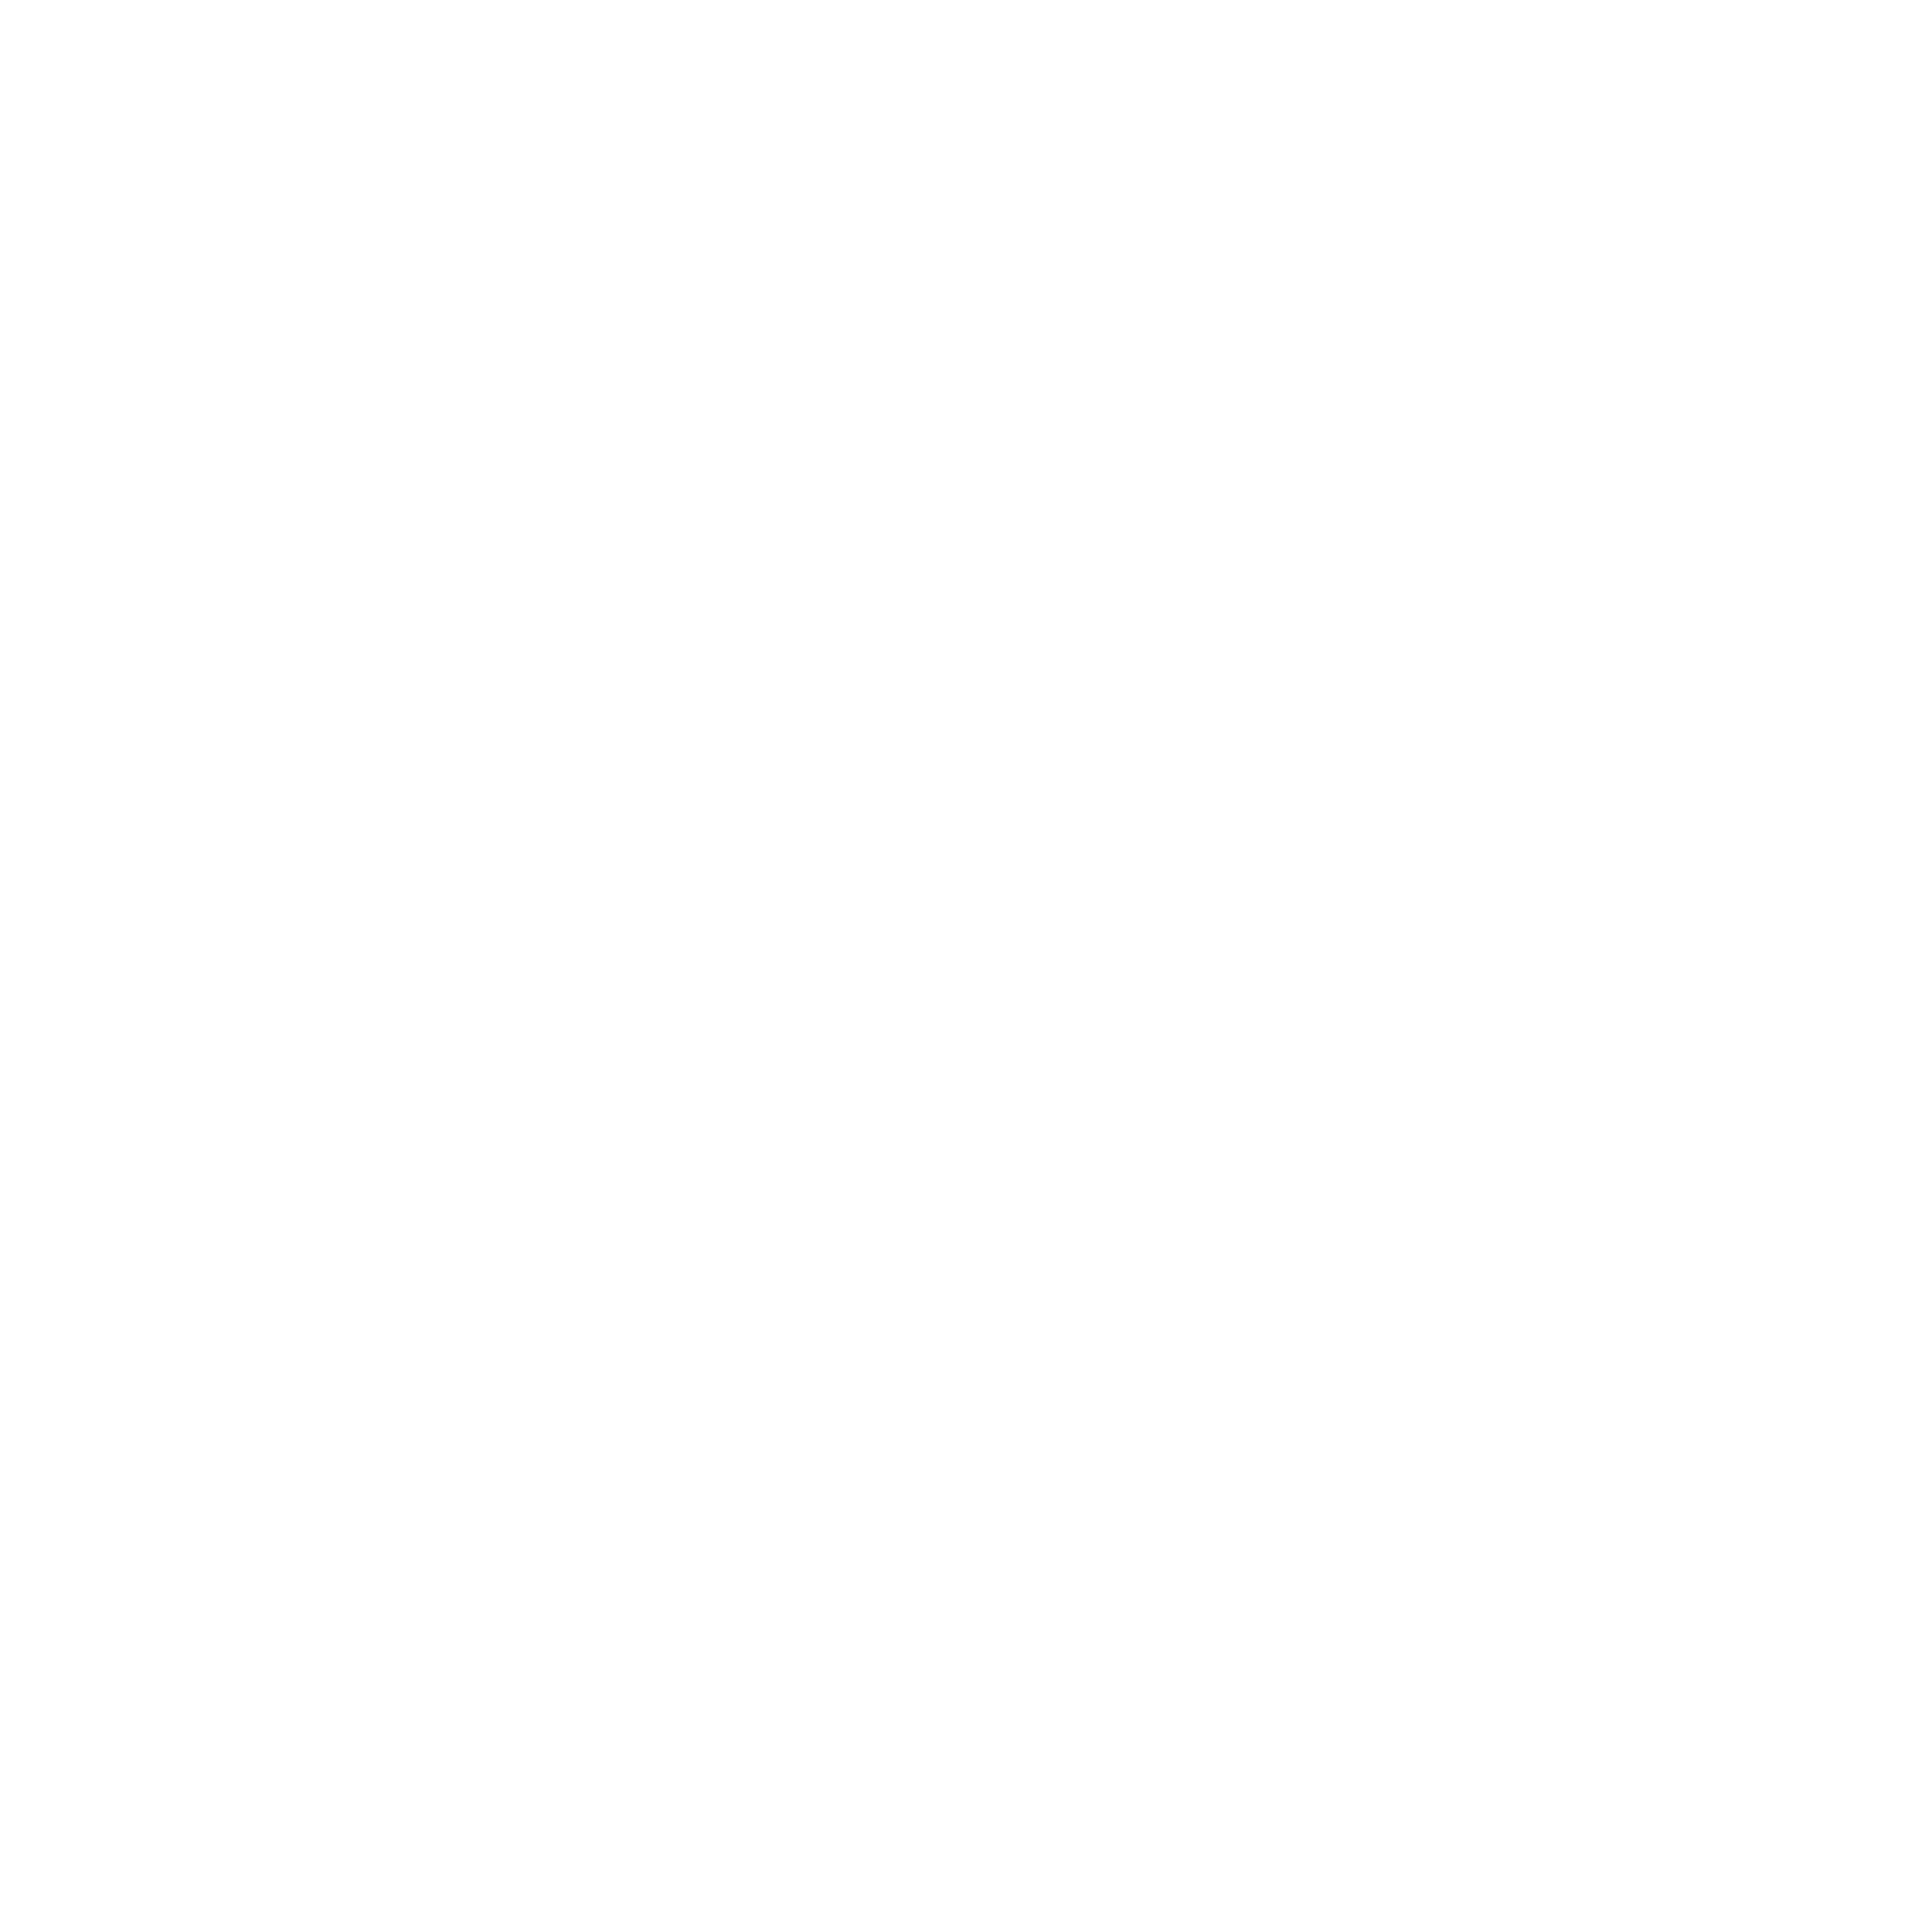 Boy Girl Banjo